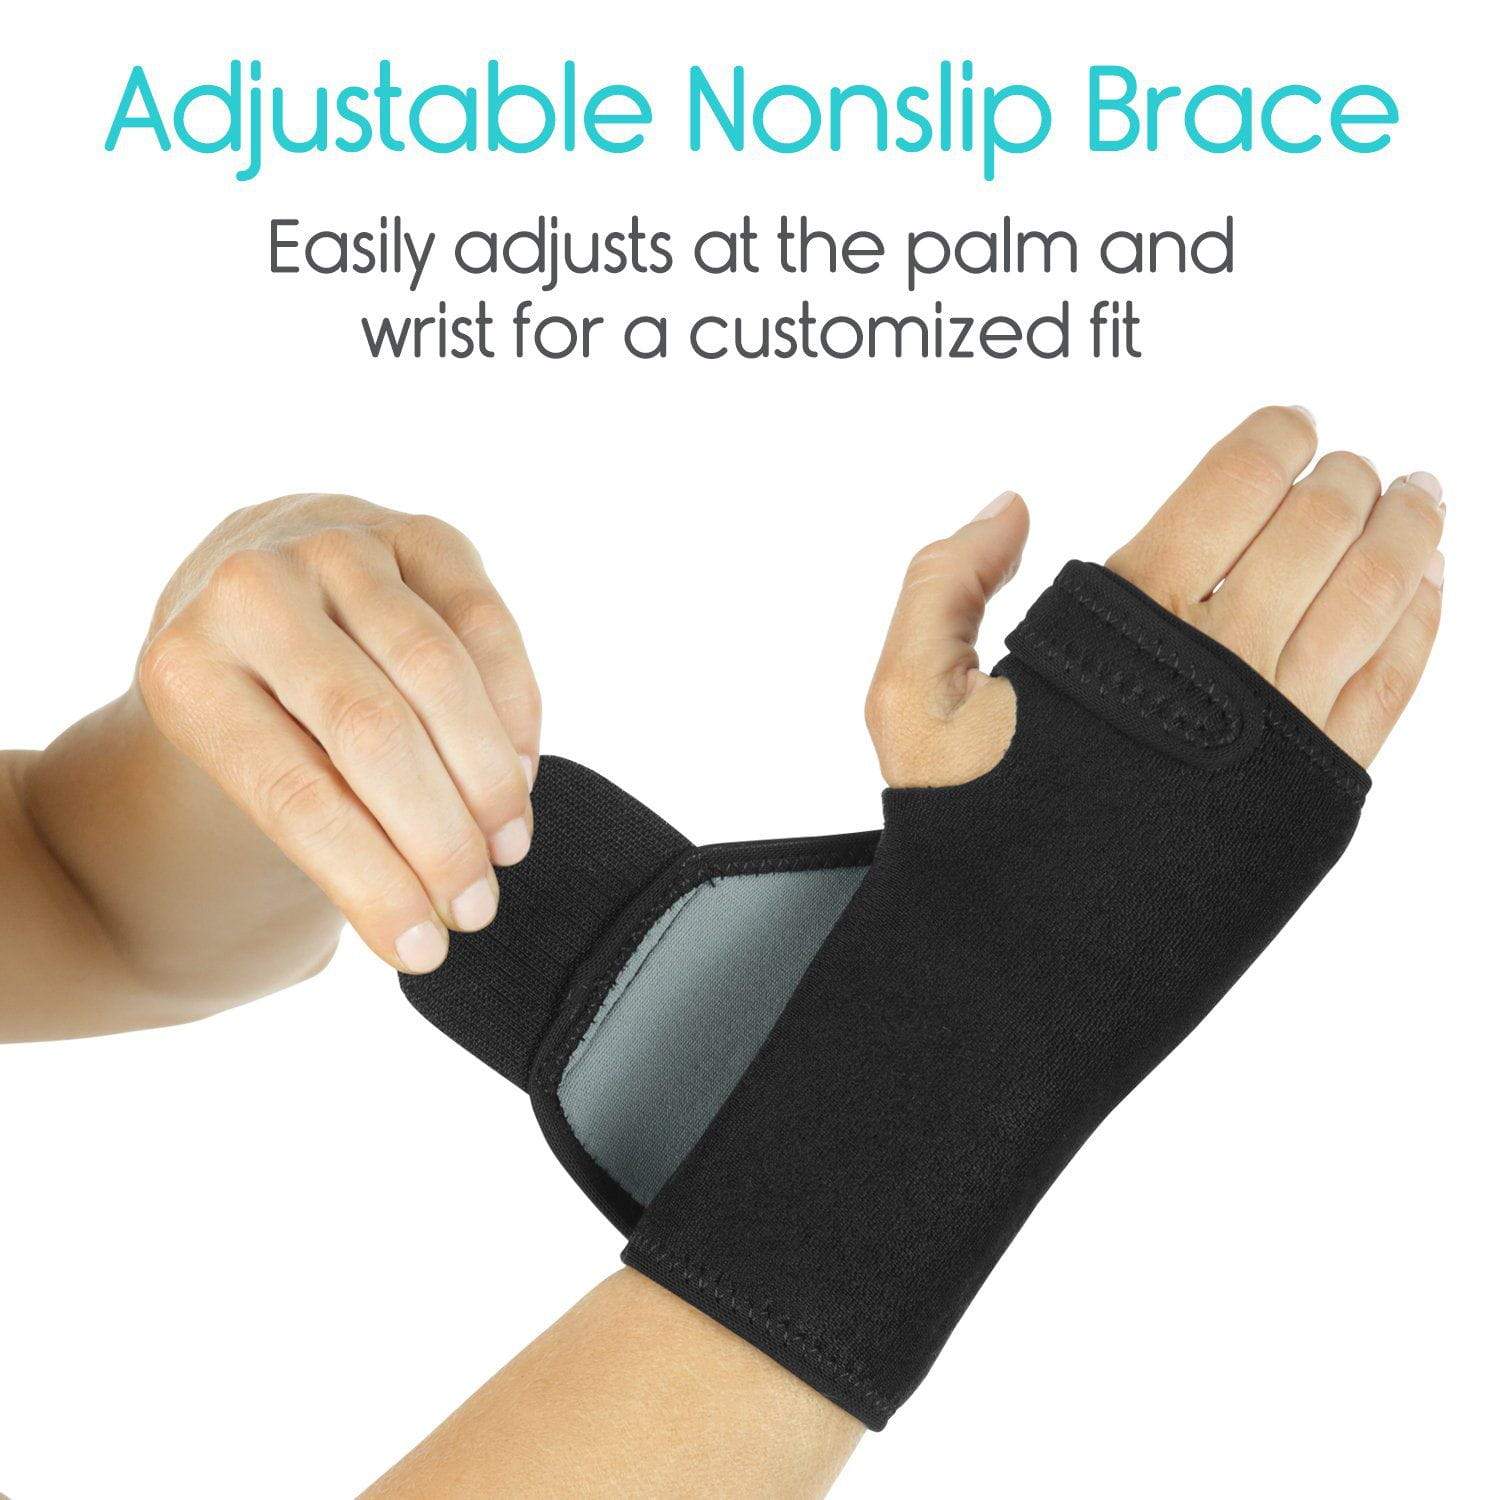 adjustable nonslip brace